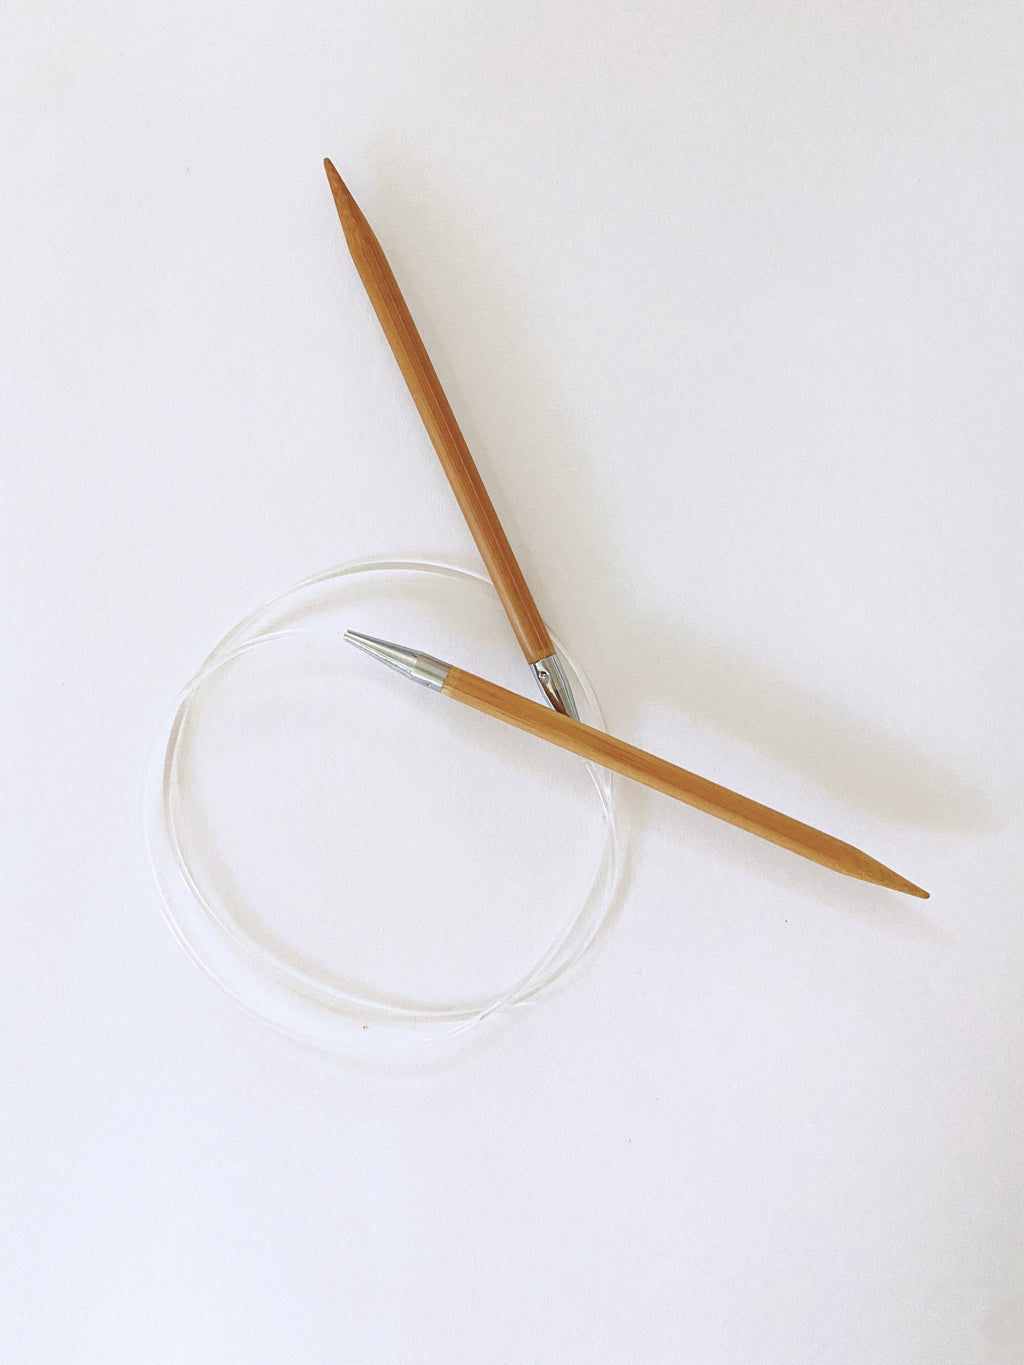 Knitting needles – 6.5 mm / 10.5 US - Wangaratta Woollen Mills